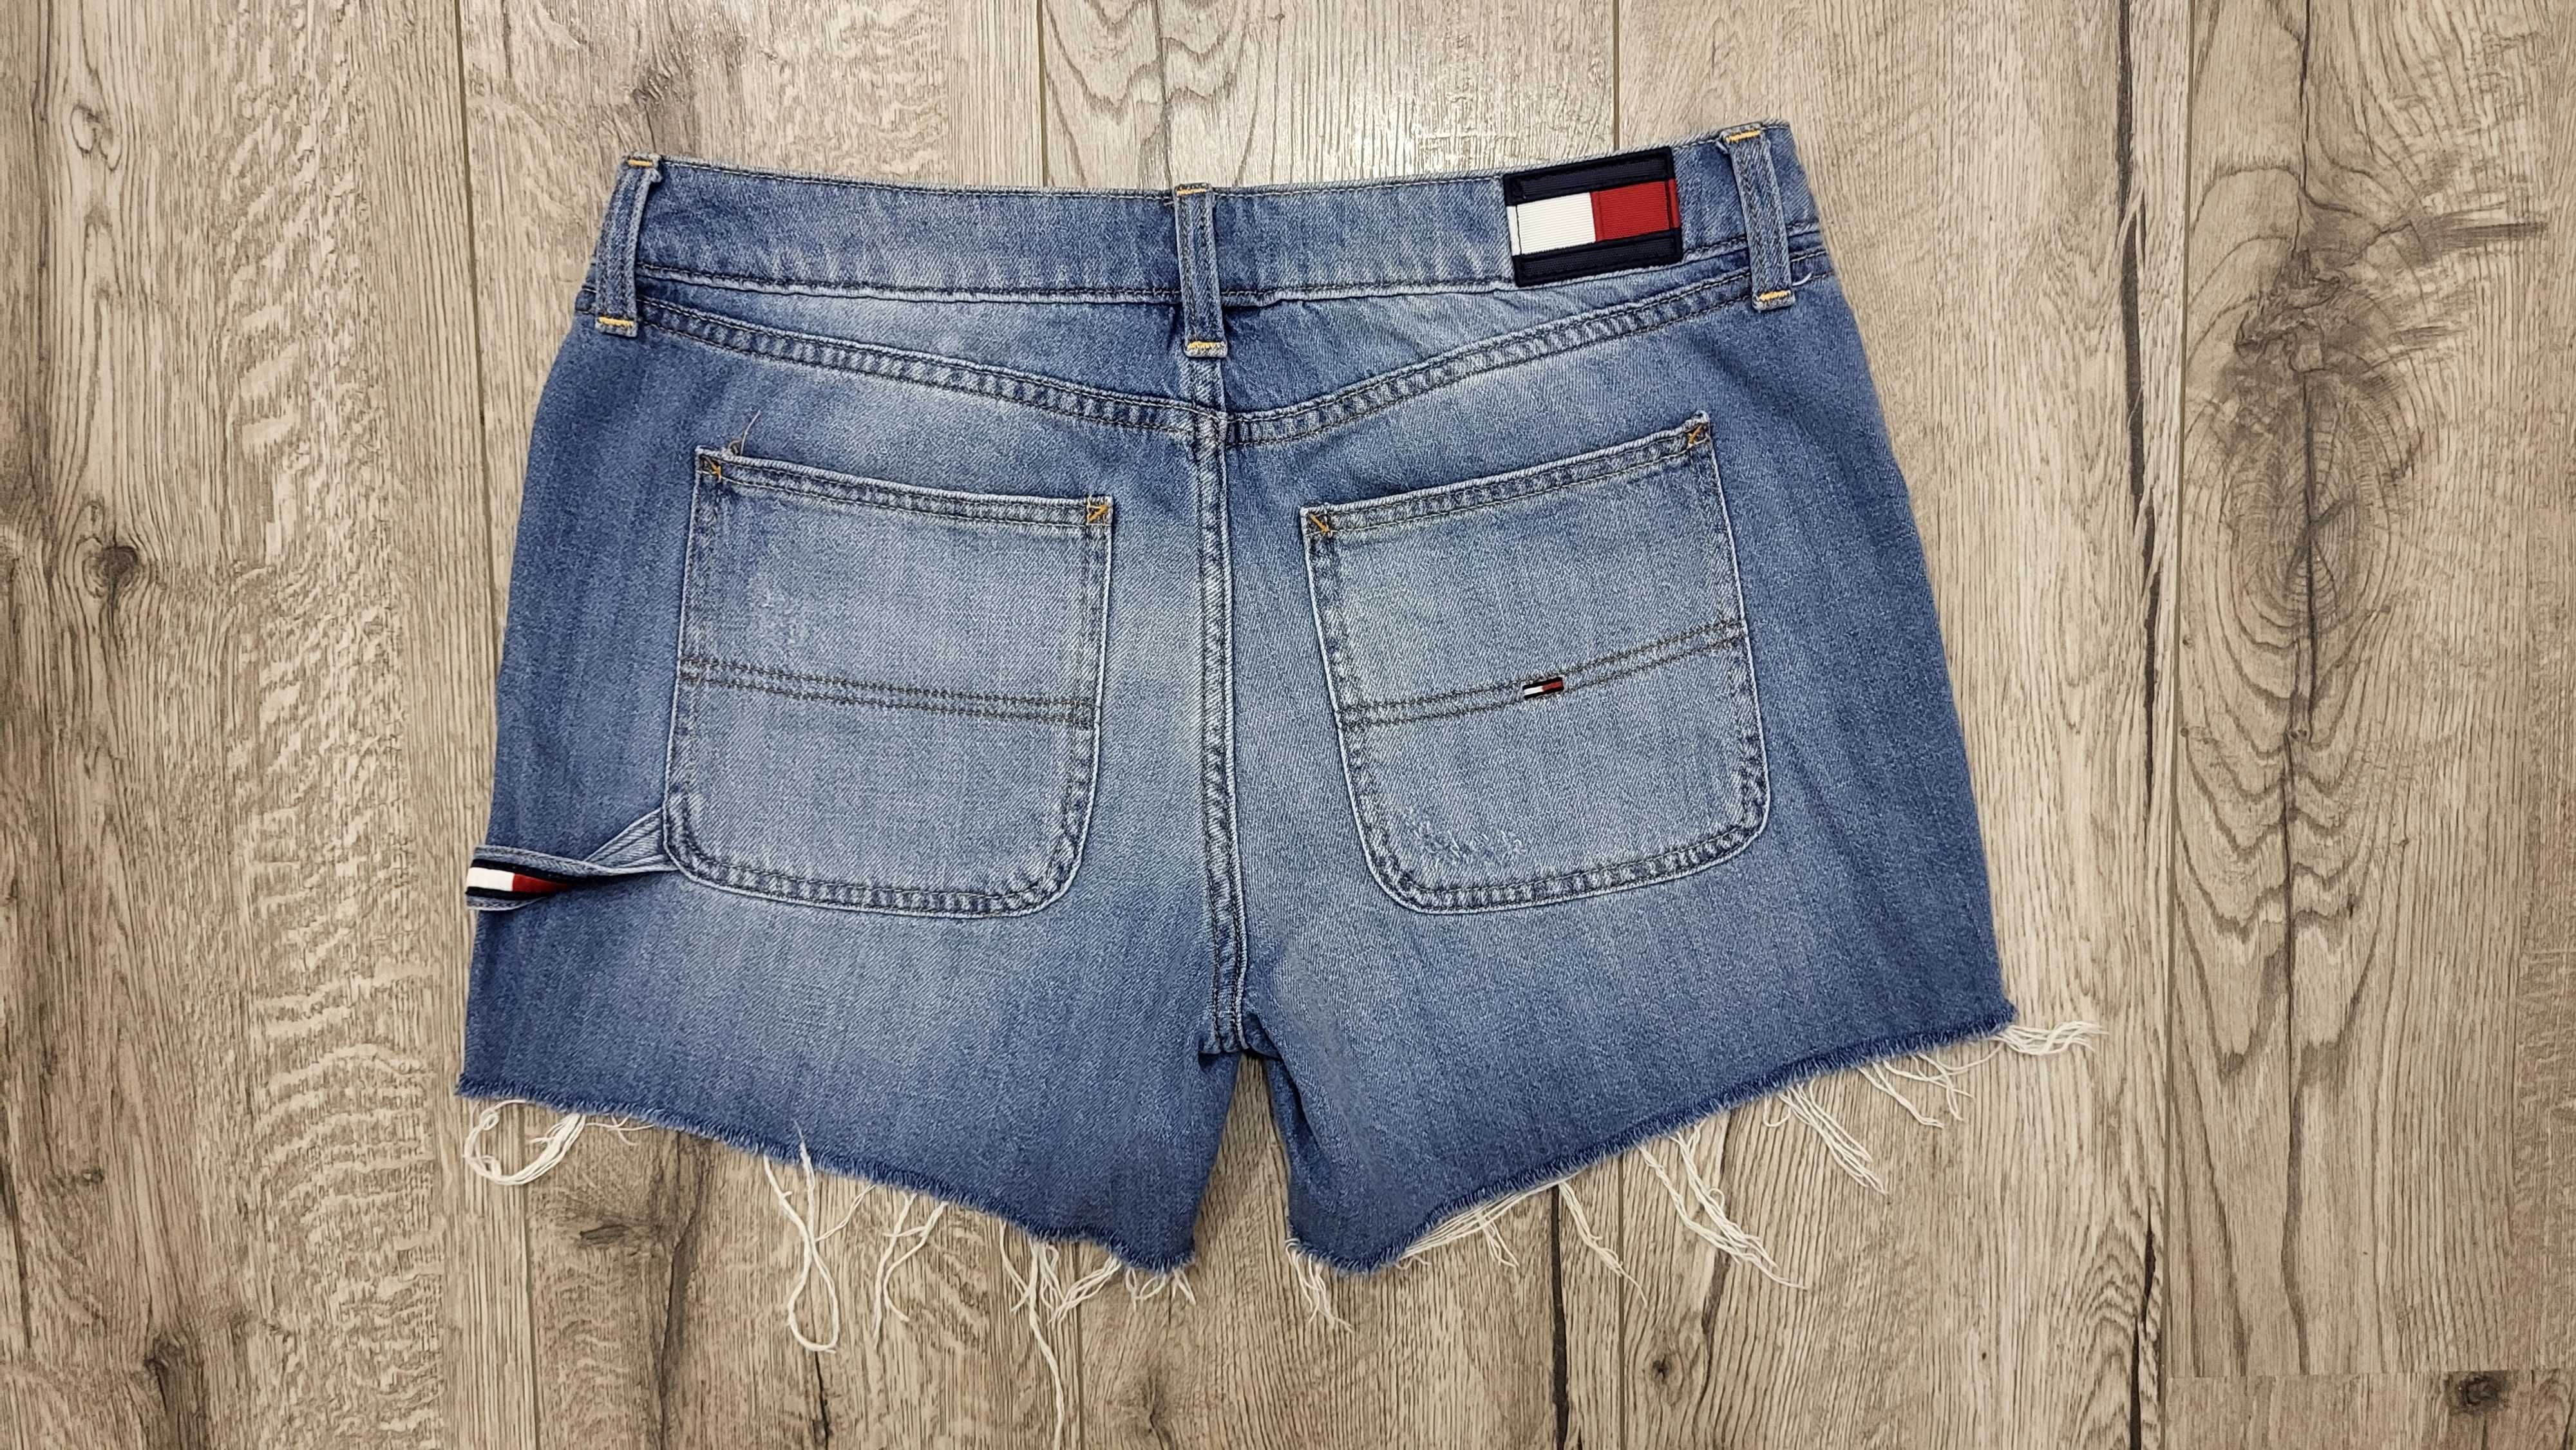 Tommy Hilfiger denim damskie spodenki jeans 4 S/M